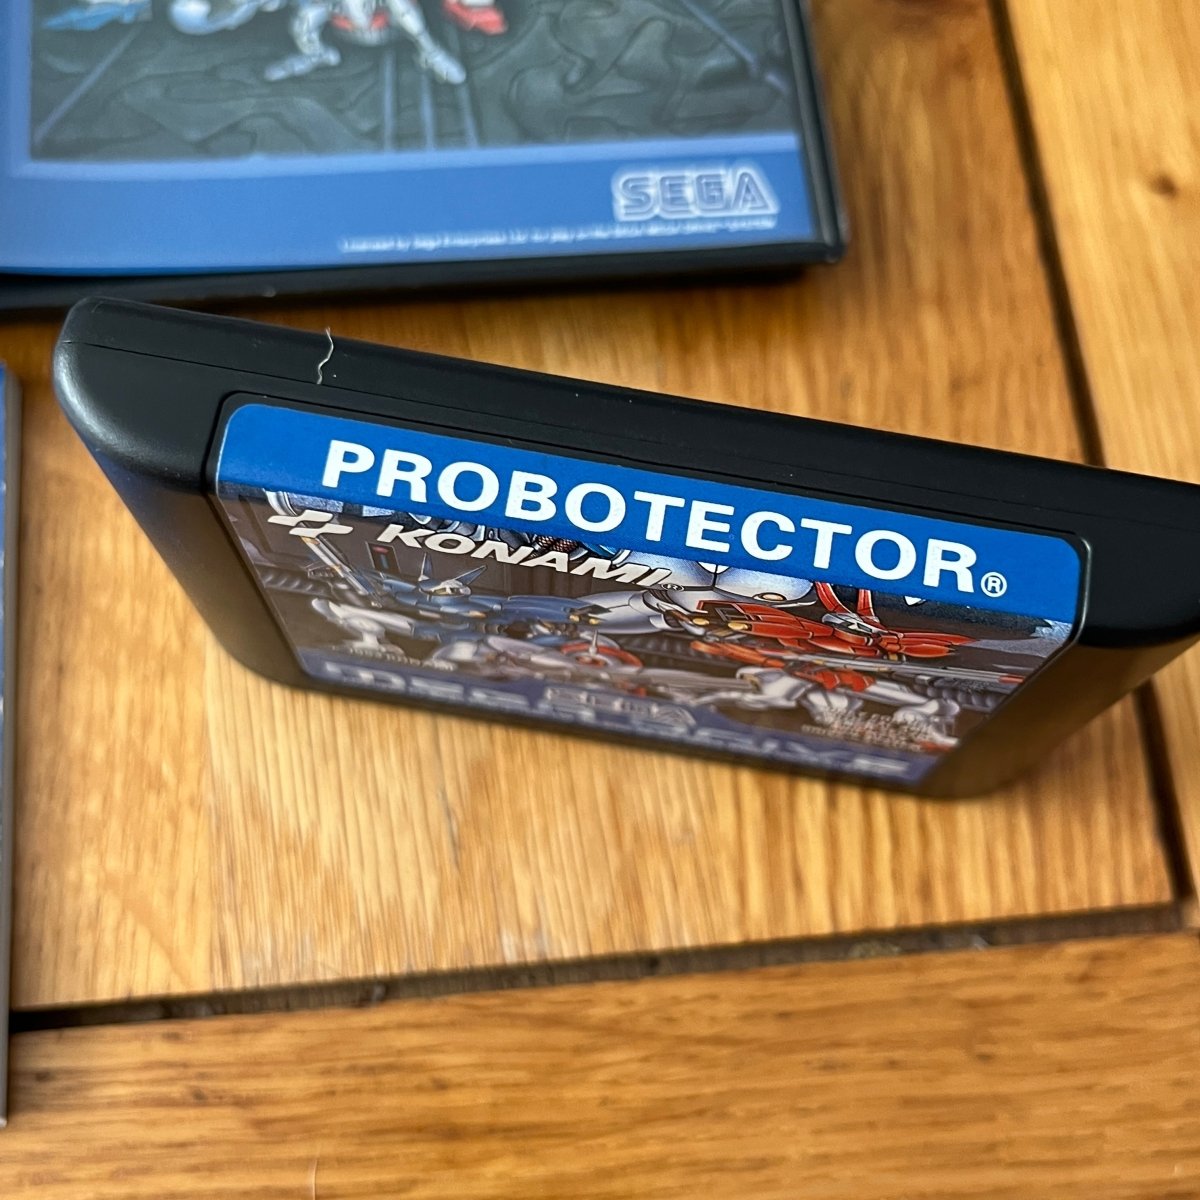 Buy Probotector Sega megadrive game complete -@ 8BitBeyond